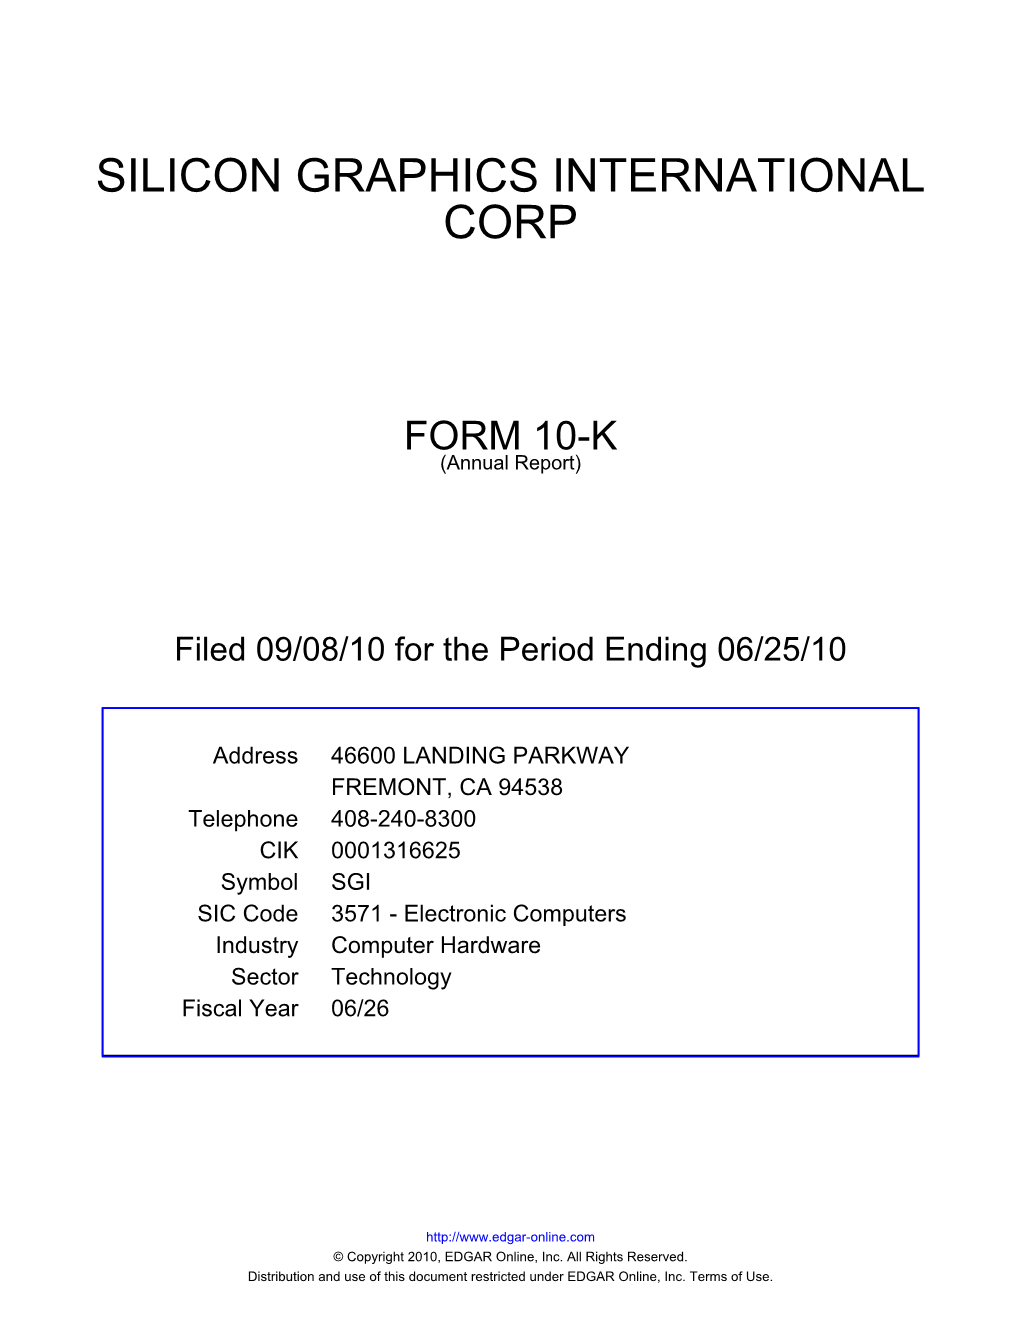 Silicon Graphics International Corp